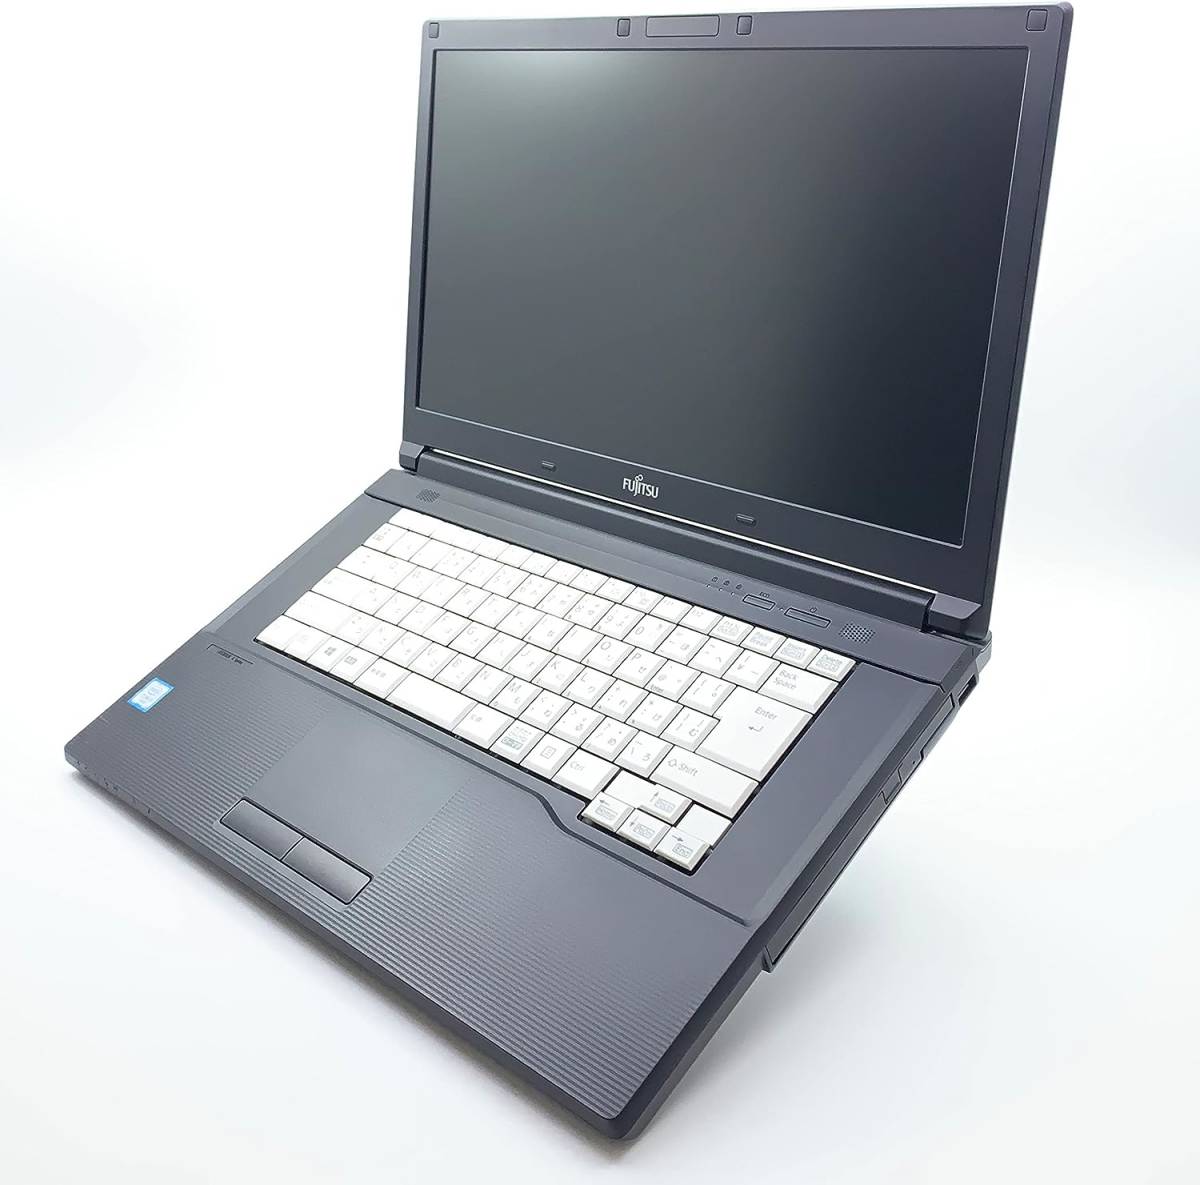  б/у ноутбук, MS off стул 2021 имеется, Windows 10 [LifeBook A576/P]Core i3, 8GB память, SSD 256GB, 15.6 type, DVD, HDMI